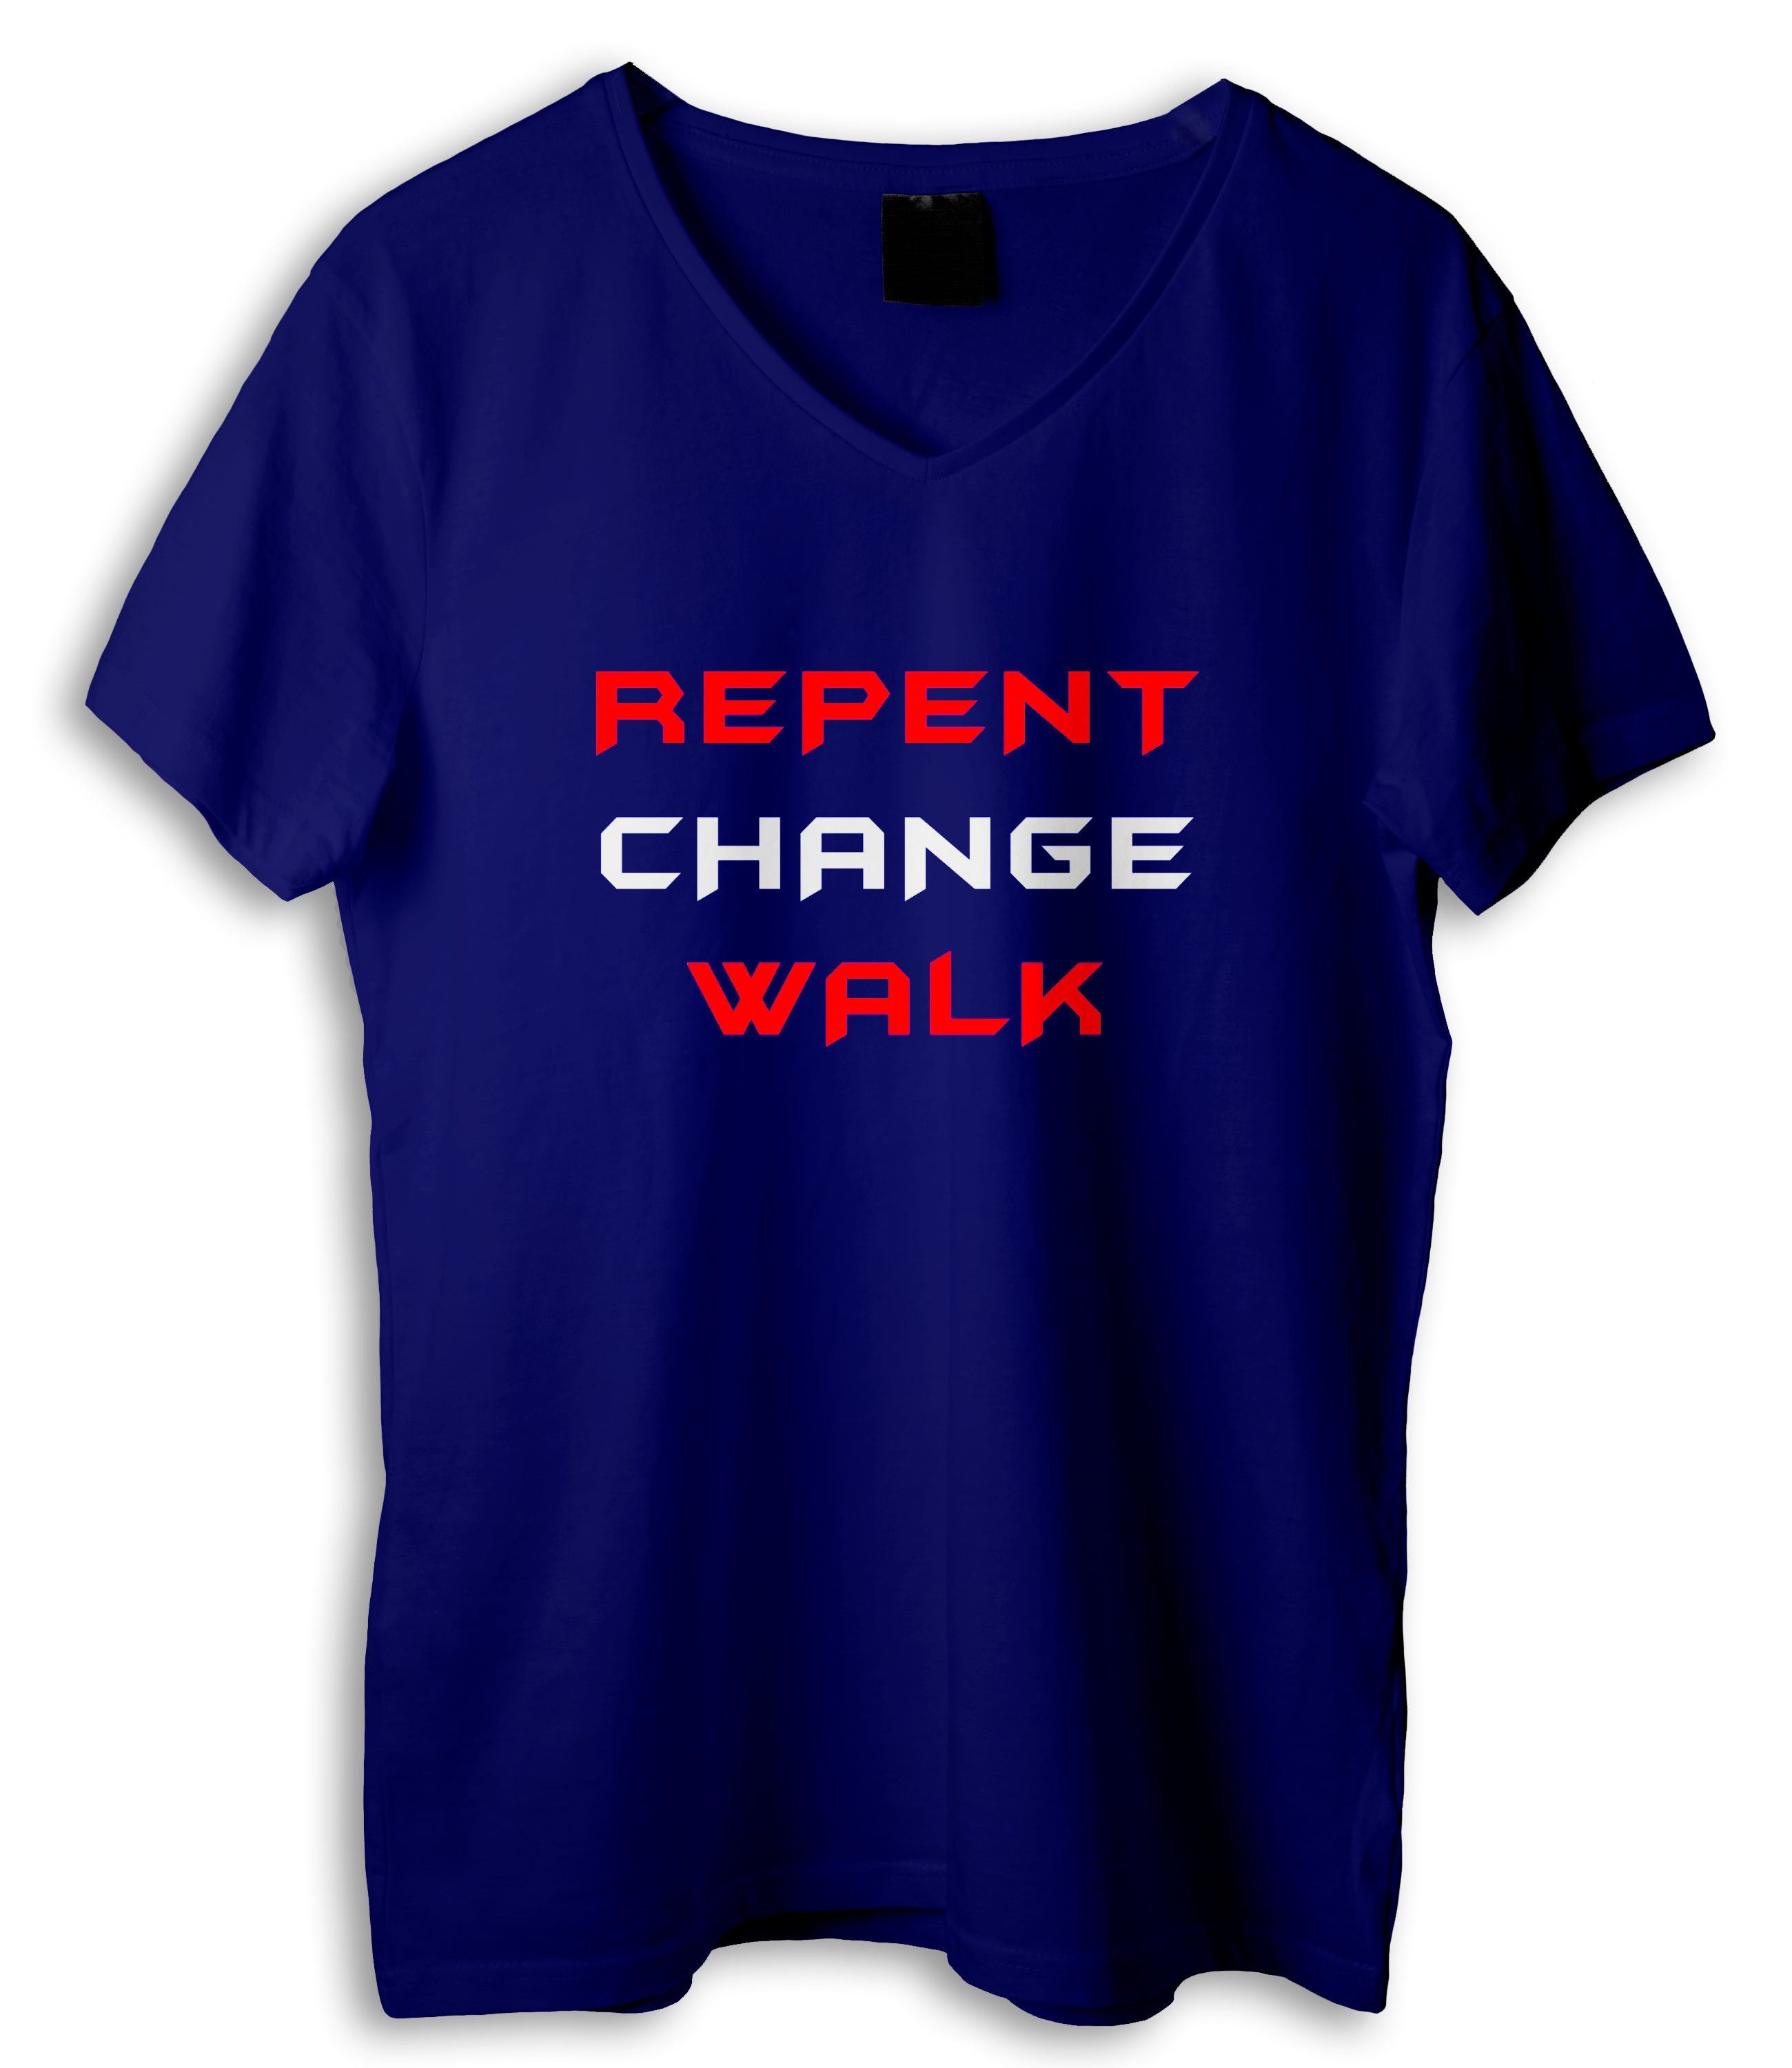 Repent Change Walk Shirt